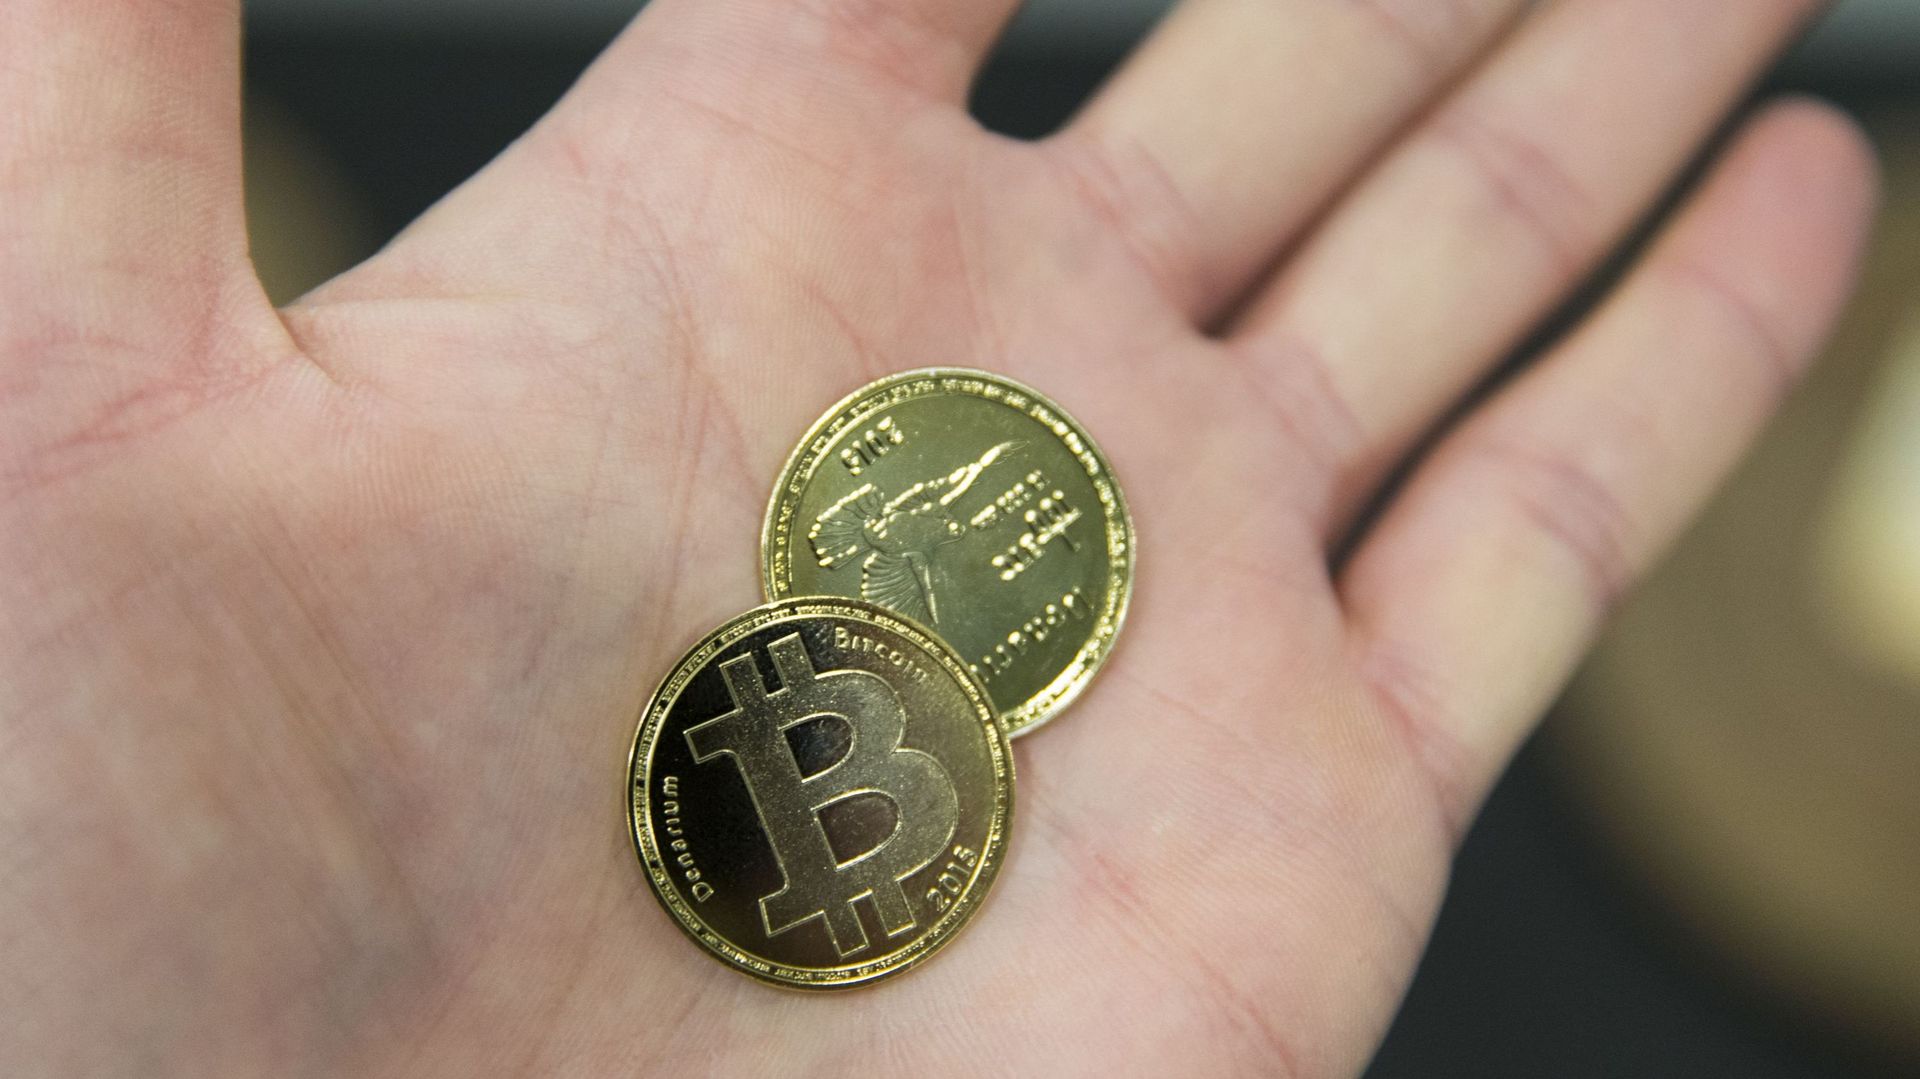 Des bitcoins